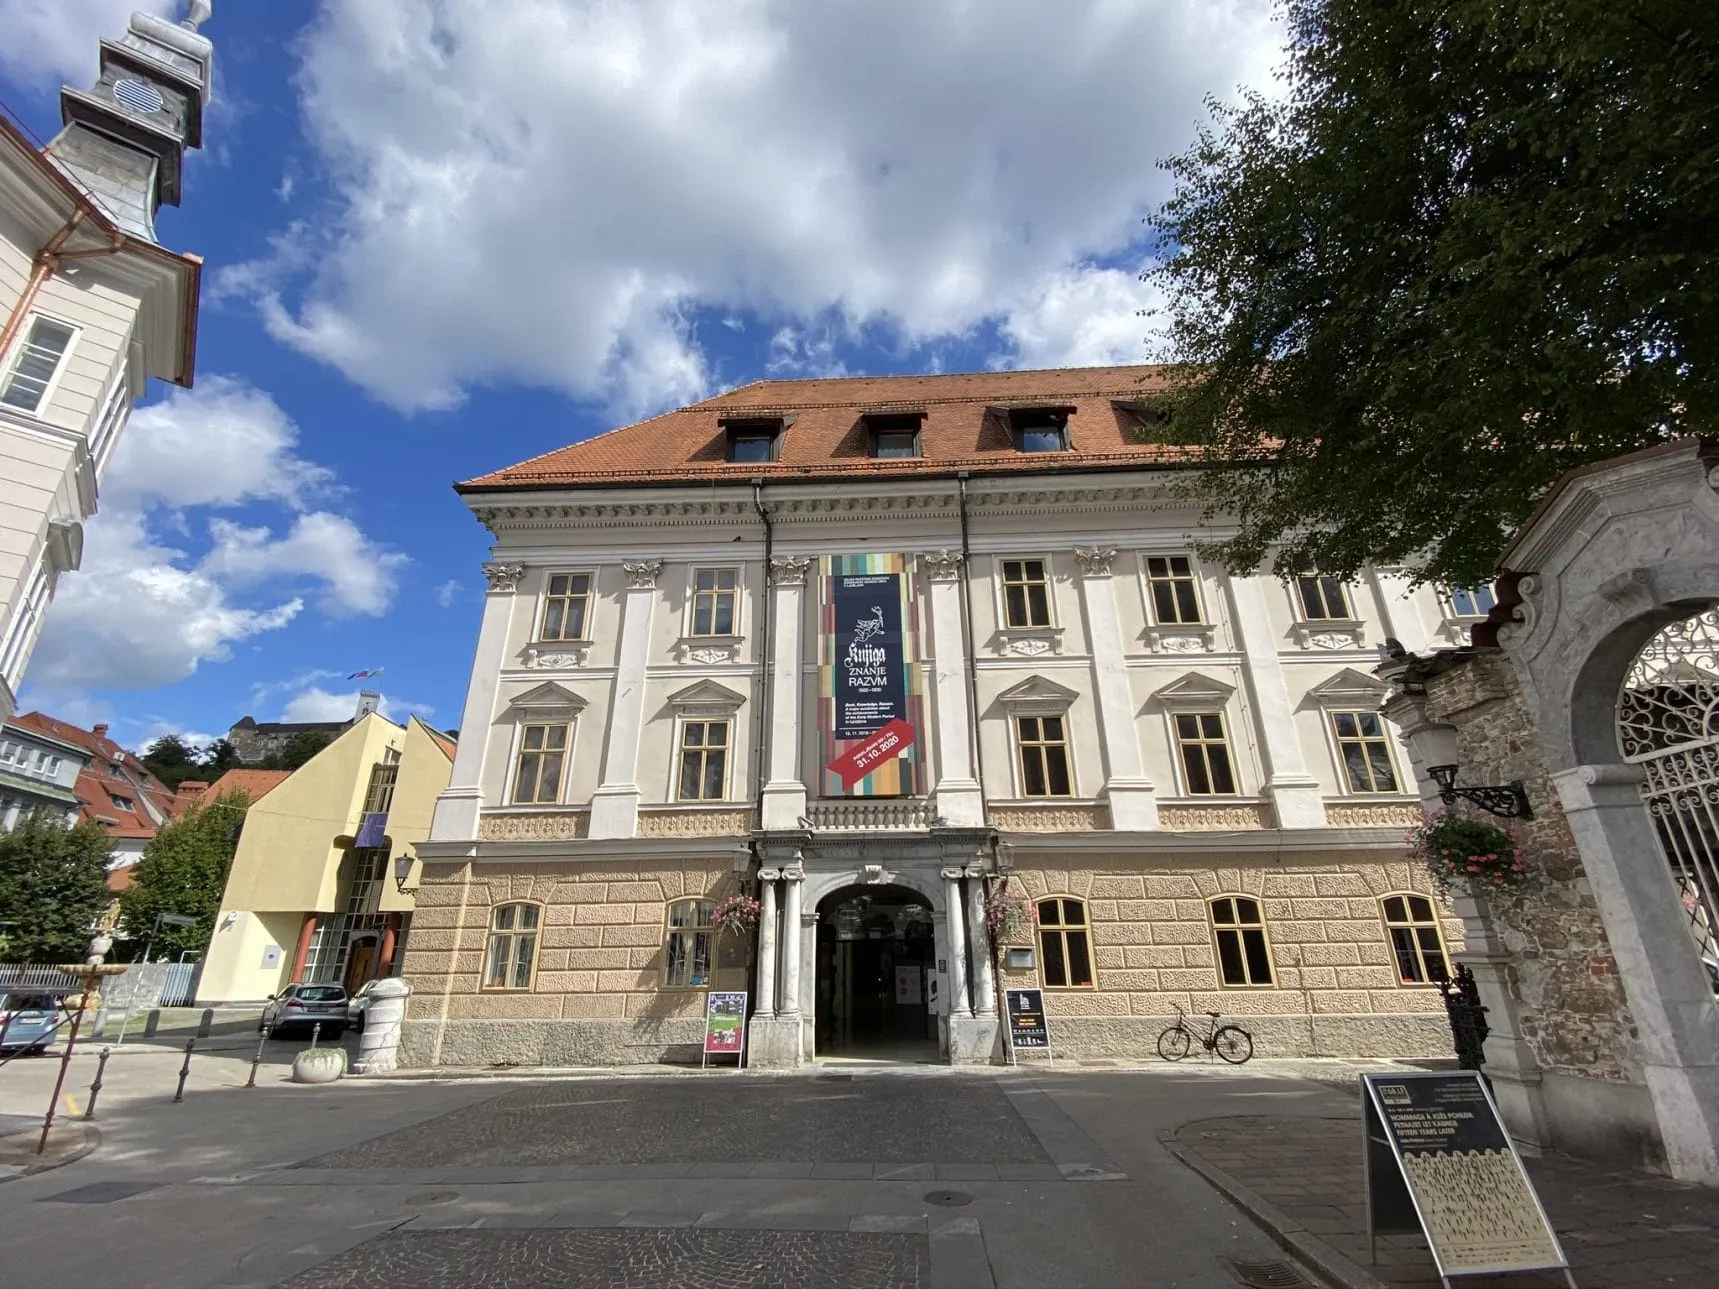 Ljubljanas stadsmuseum